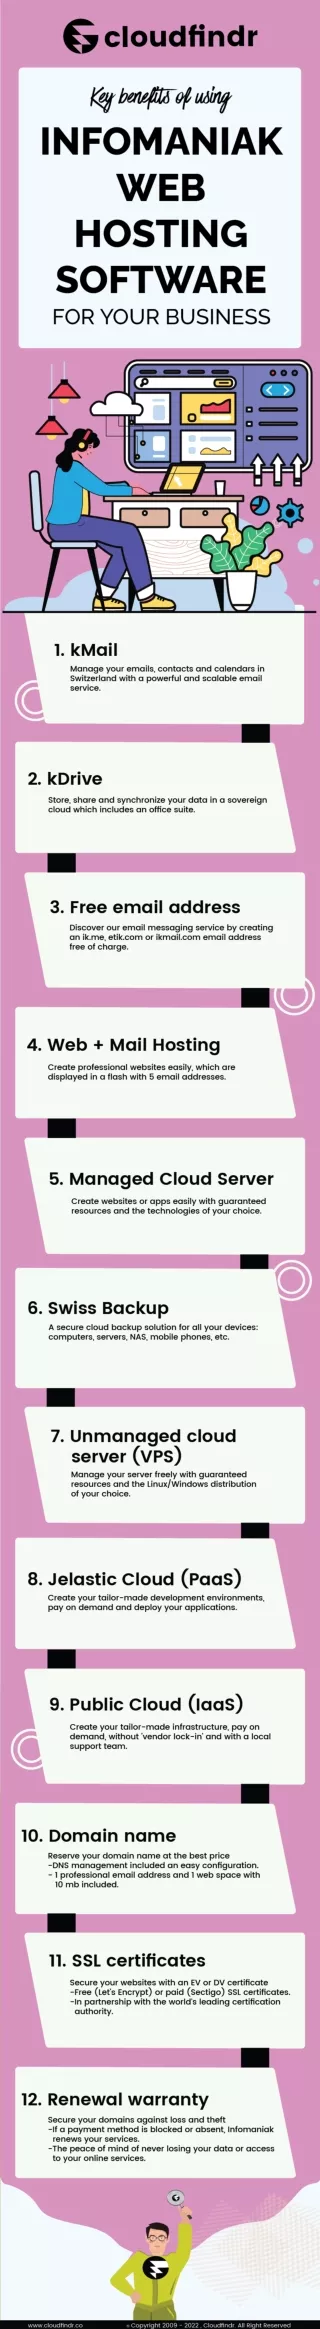 Key benefits of using Infomaniak web hosting software